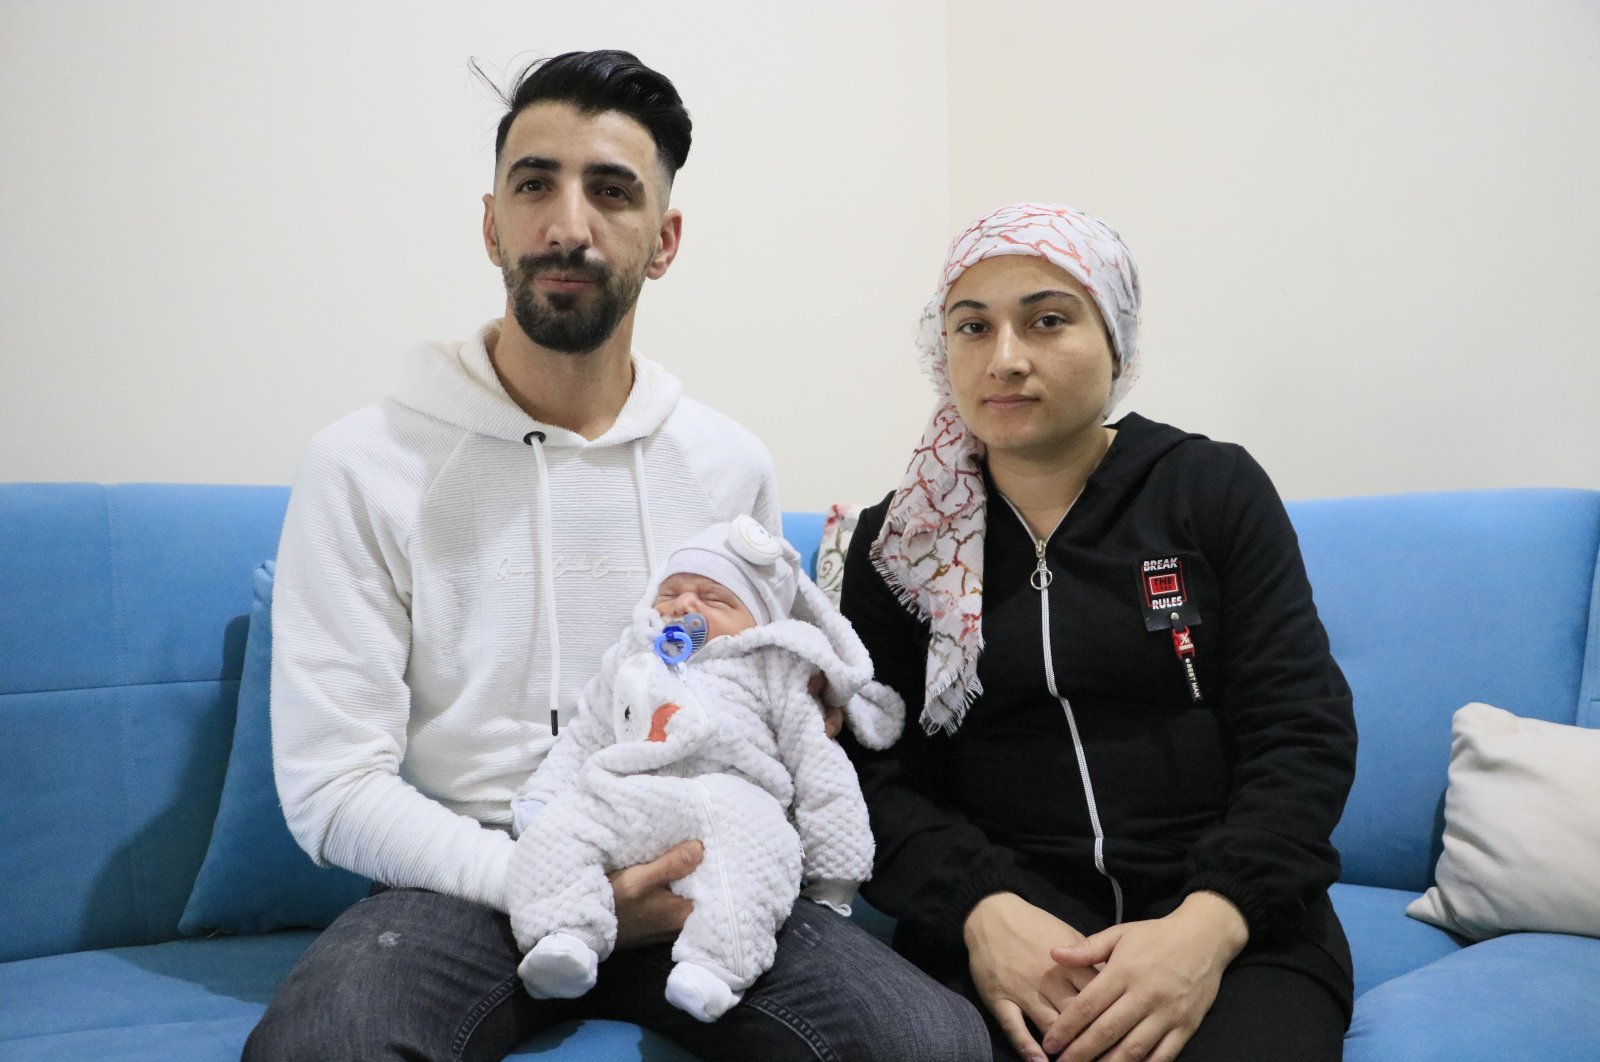 Güven Arslan and his wife Sibel Arslan pose with their newborn baby Ragnar in Diyarbakır, southeastern Turkey, Jan. 10, 2022. (DHA PHOTO)